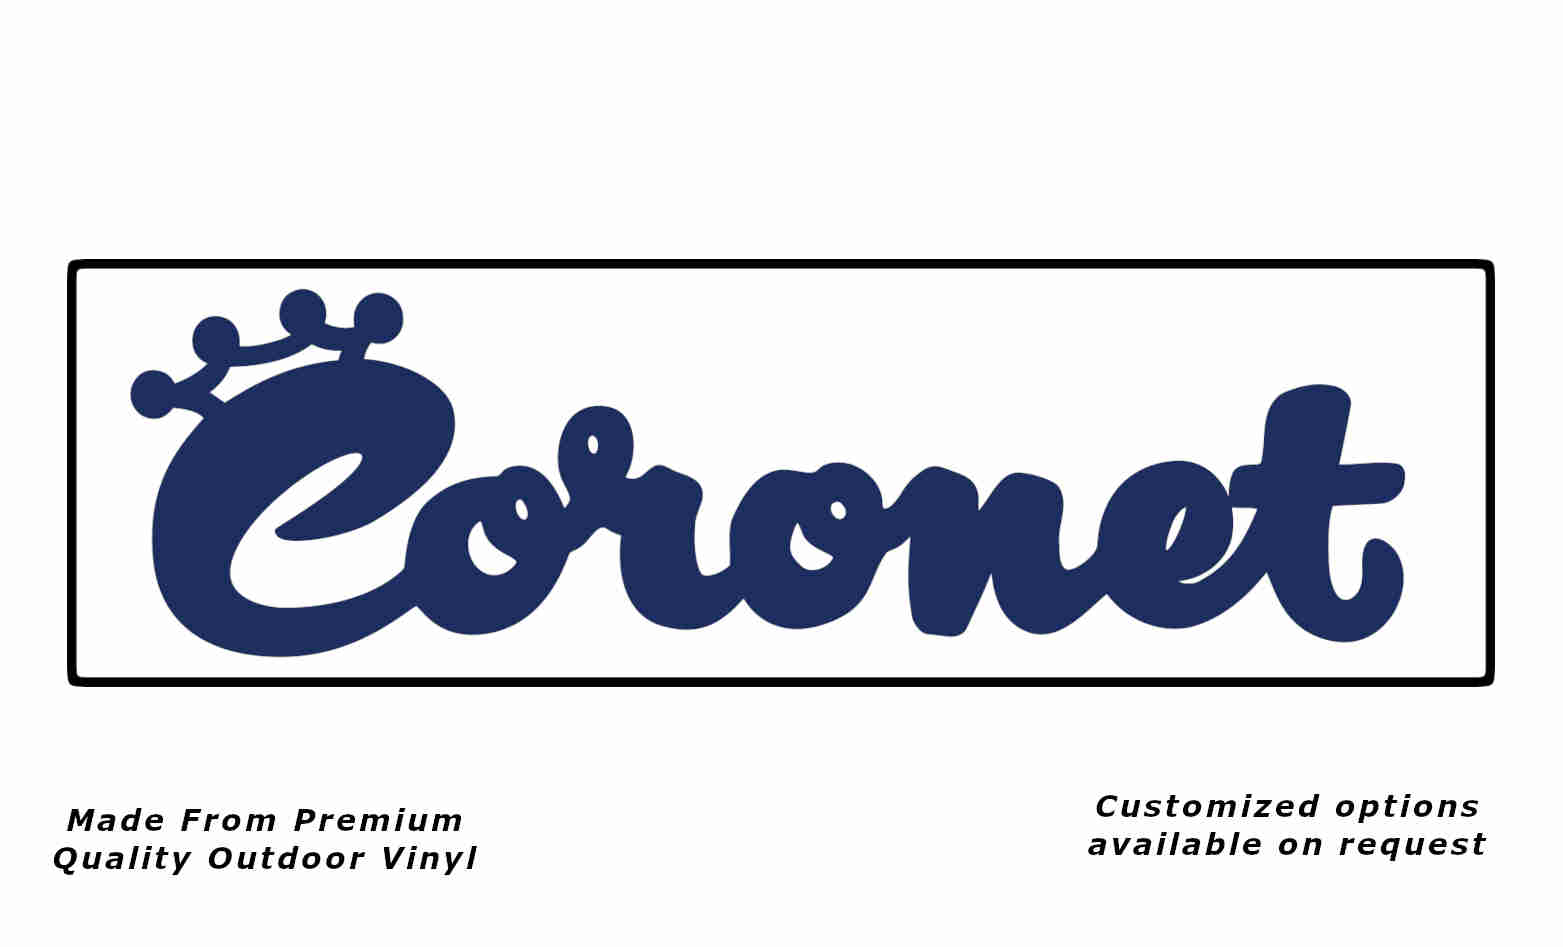 Coronet with border caravan replacement vinyl decal sticker in dark blue and black.